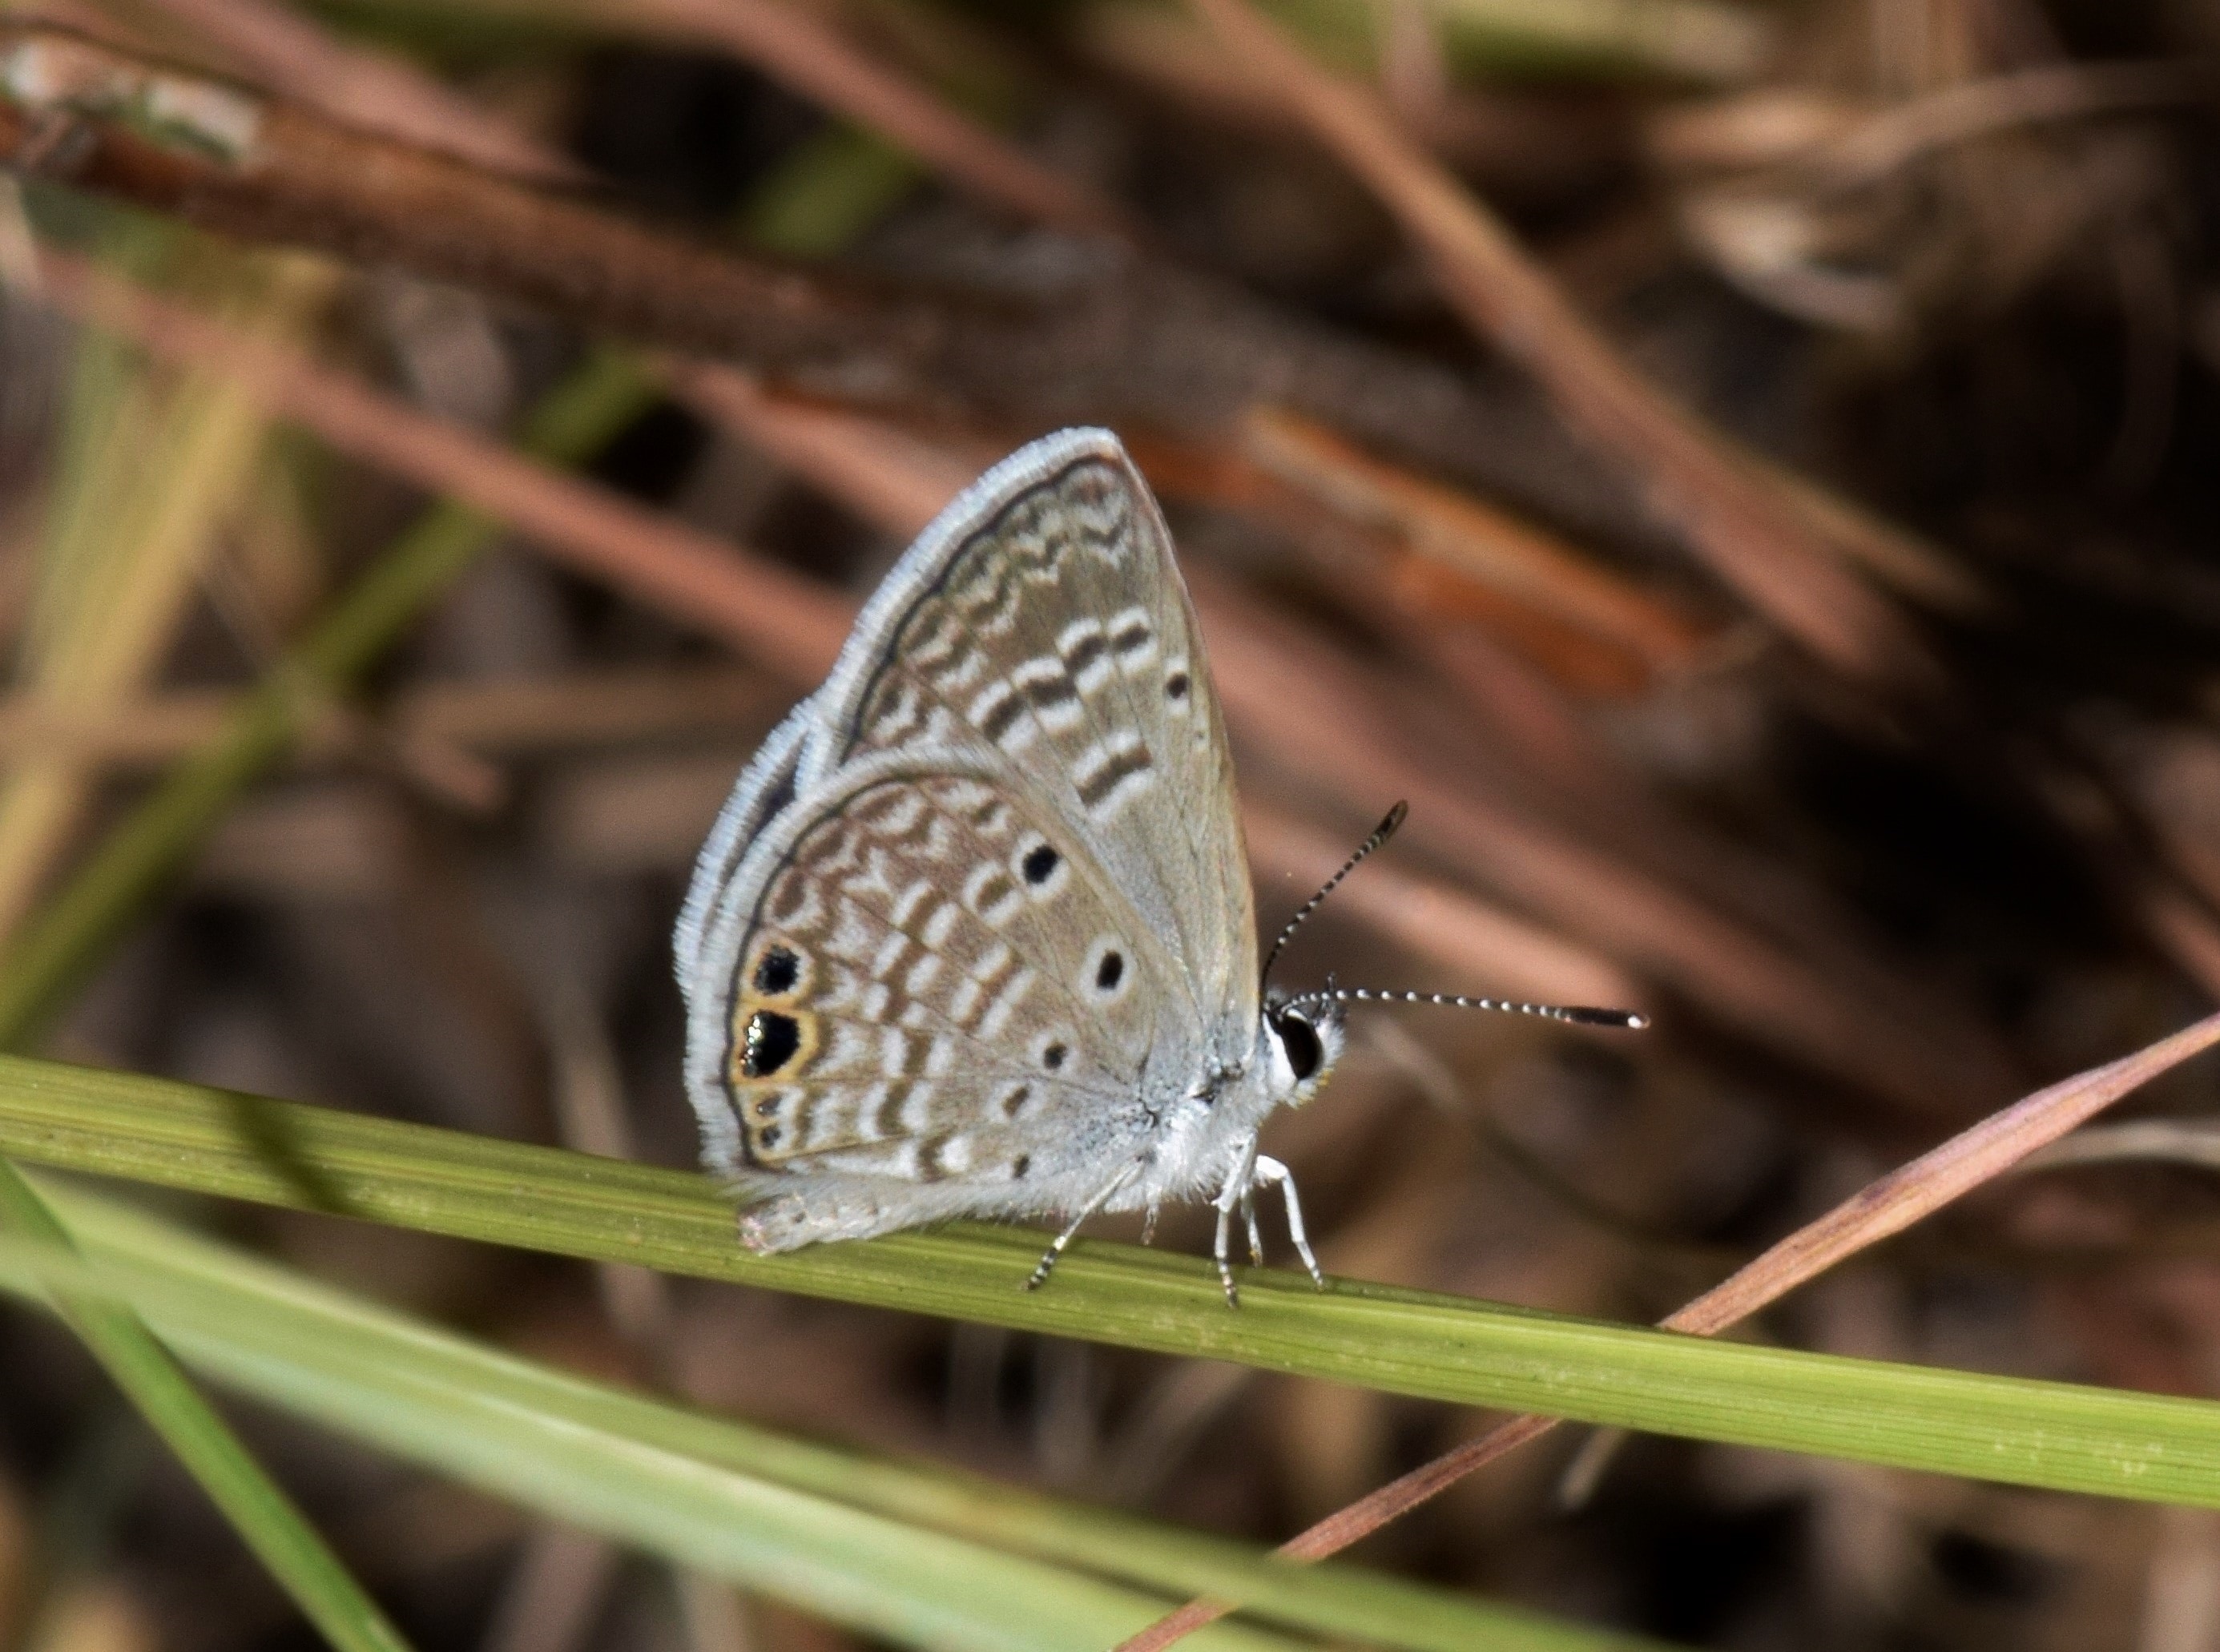 silver studded blue butterfly